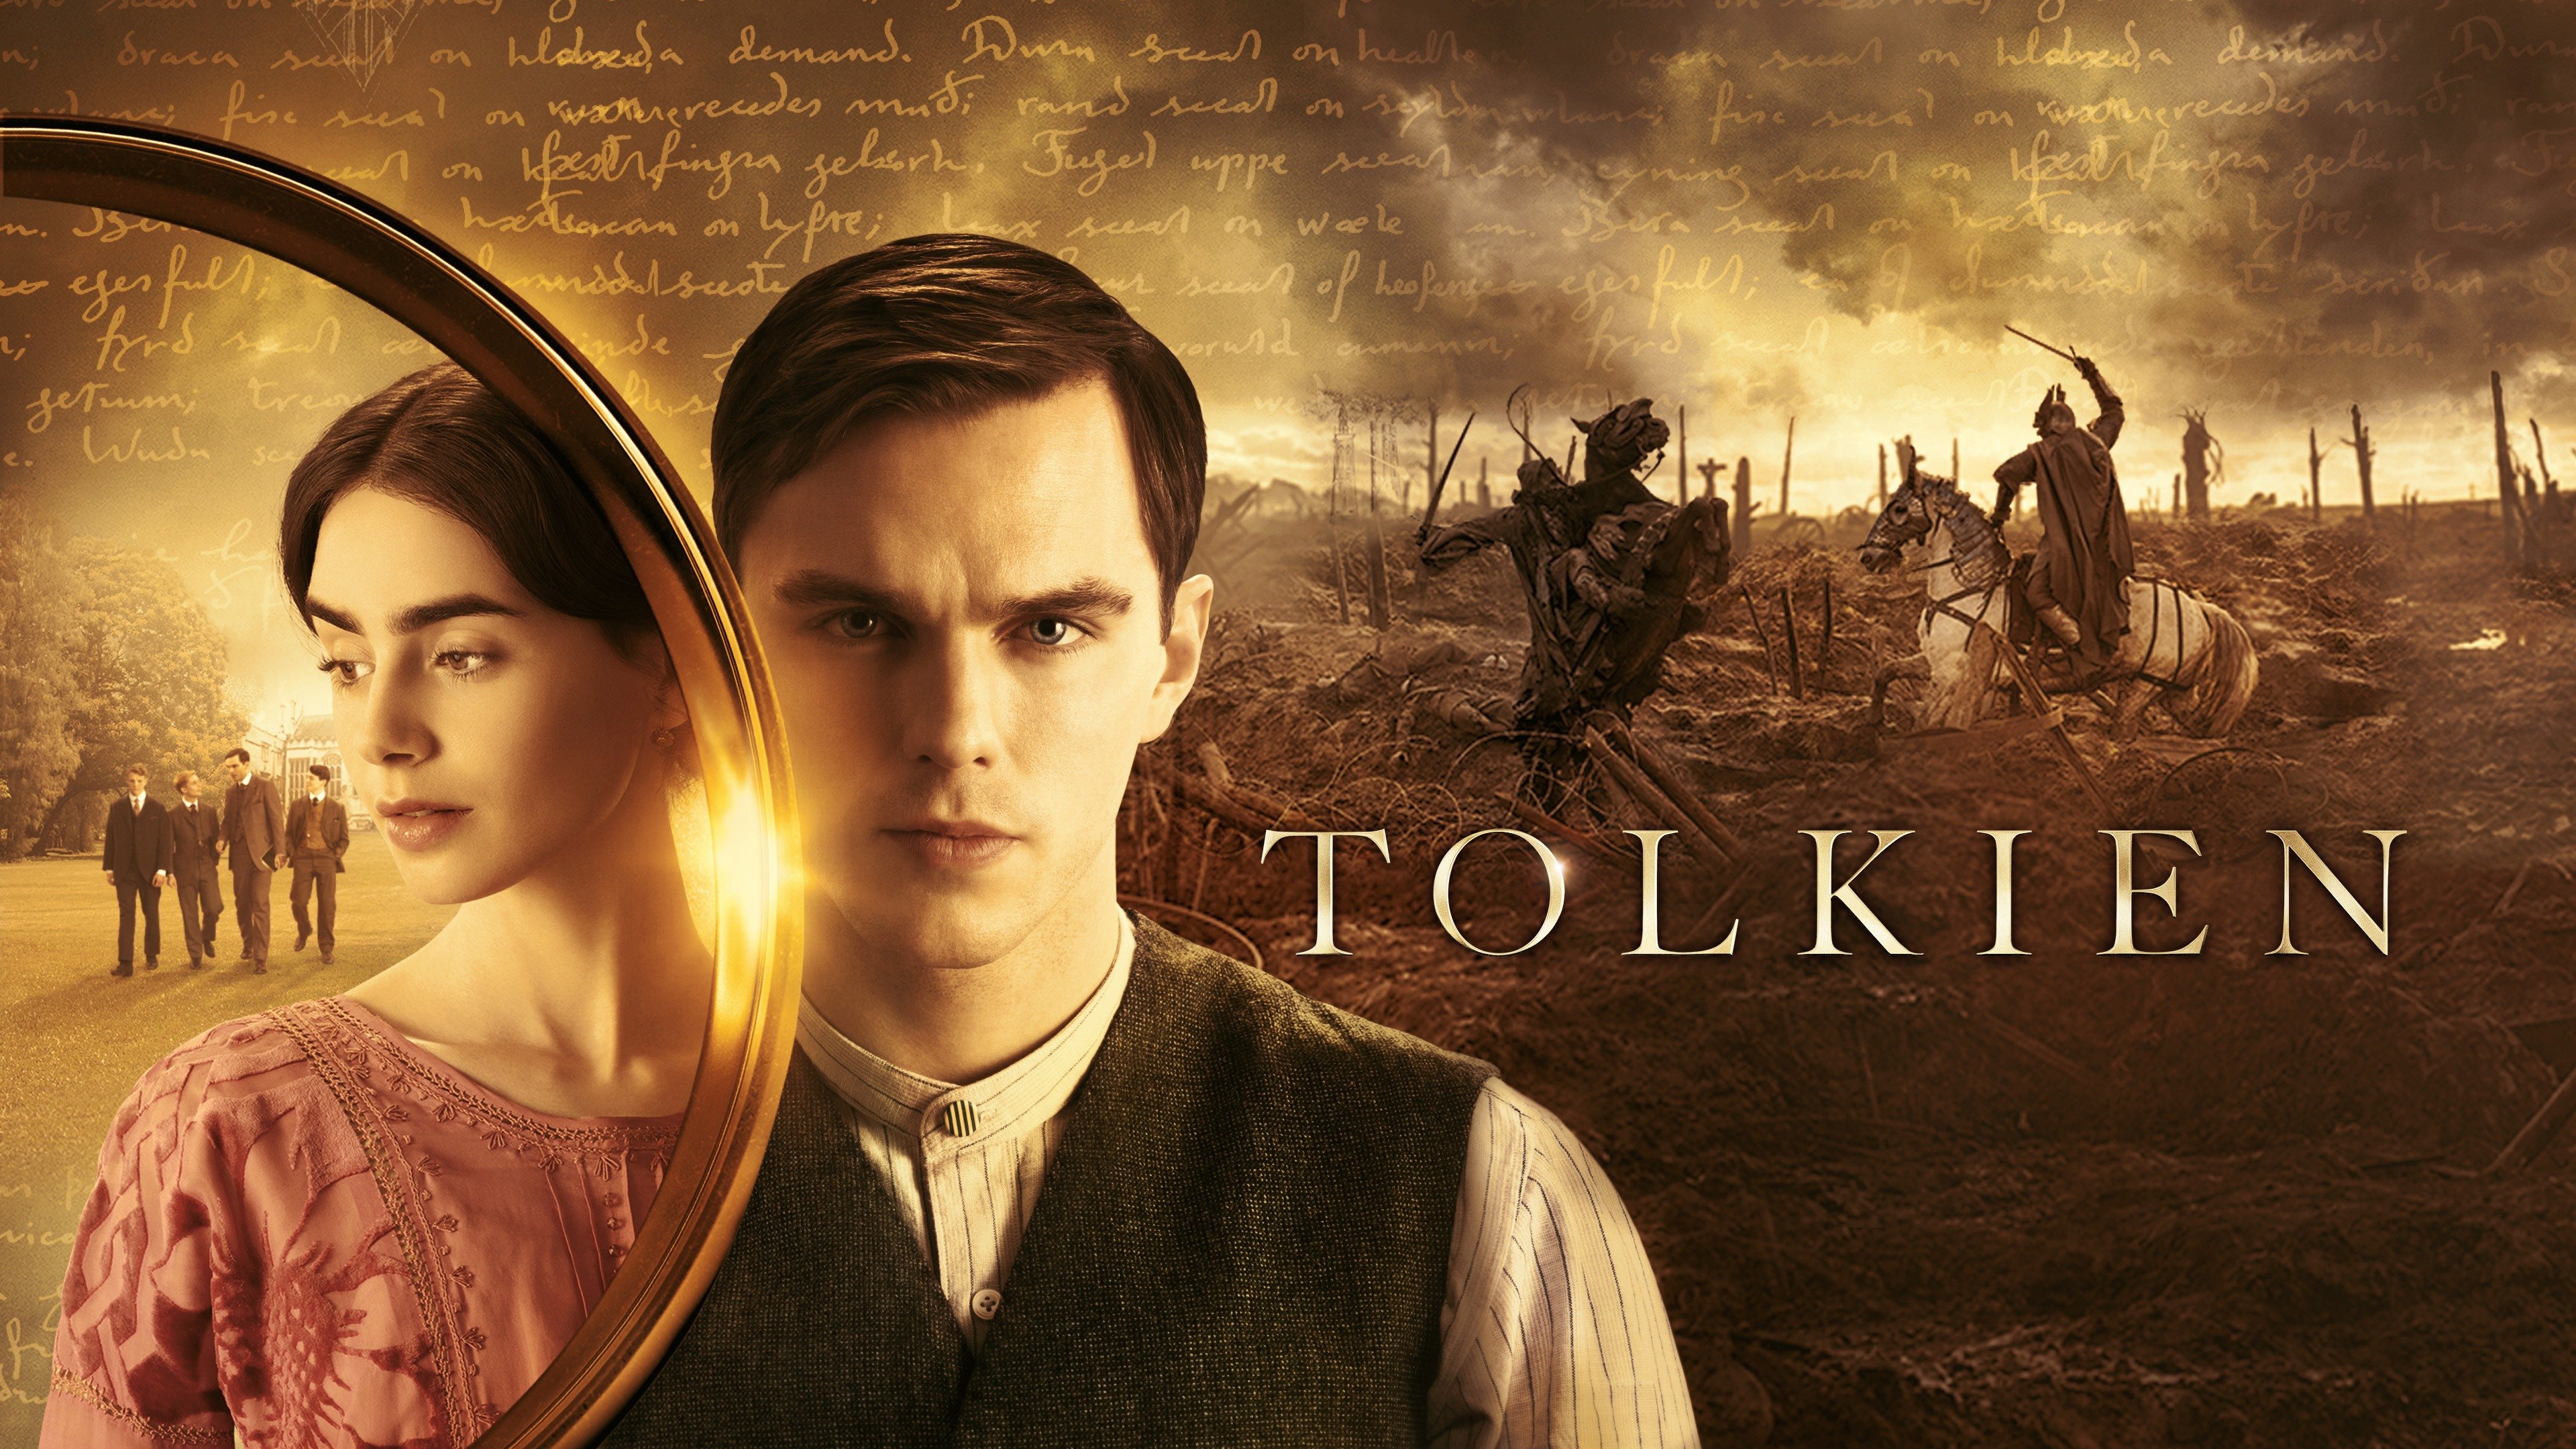 Tolkien Trailer 2 Trailers & Videos Rotten Tomatoes